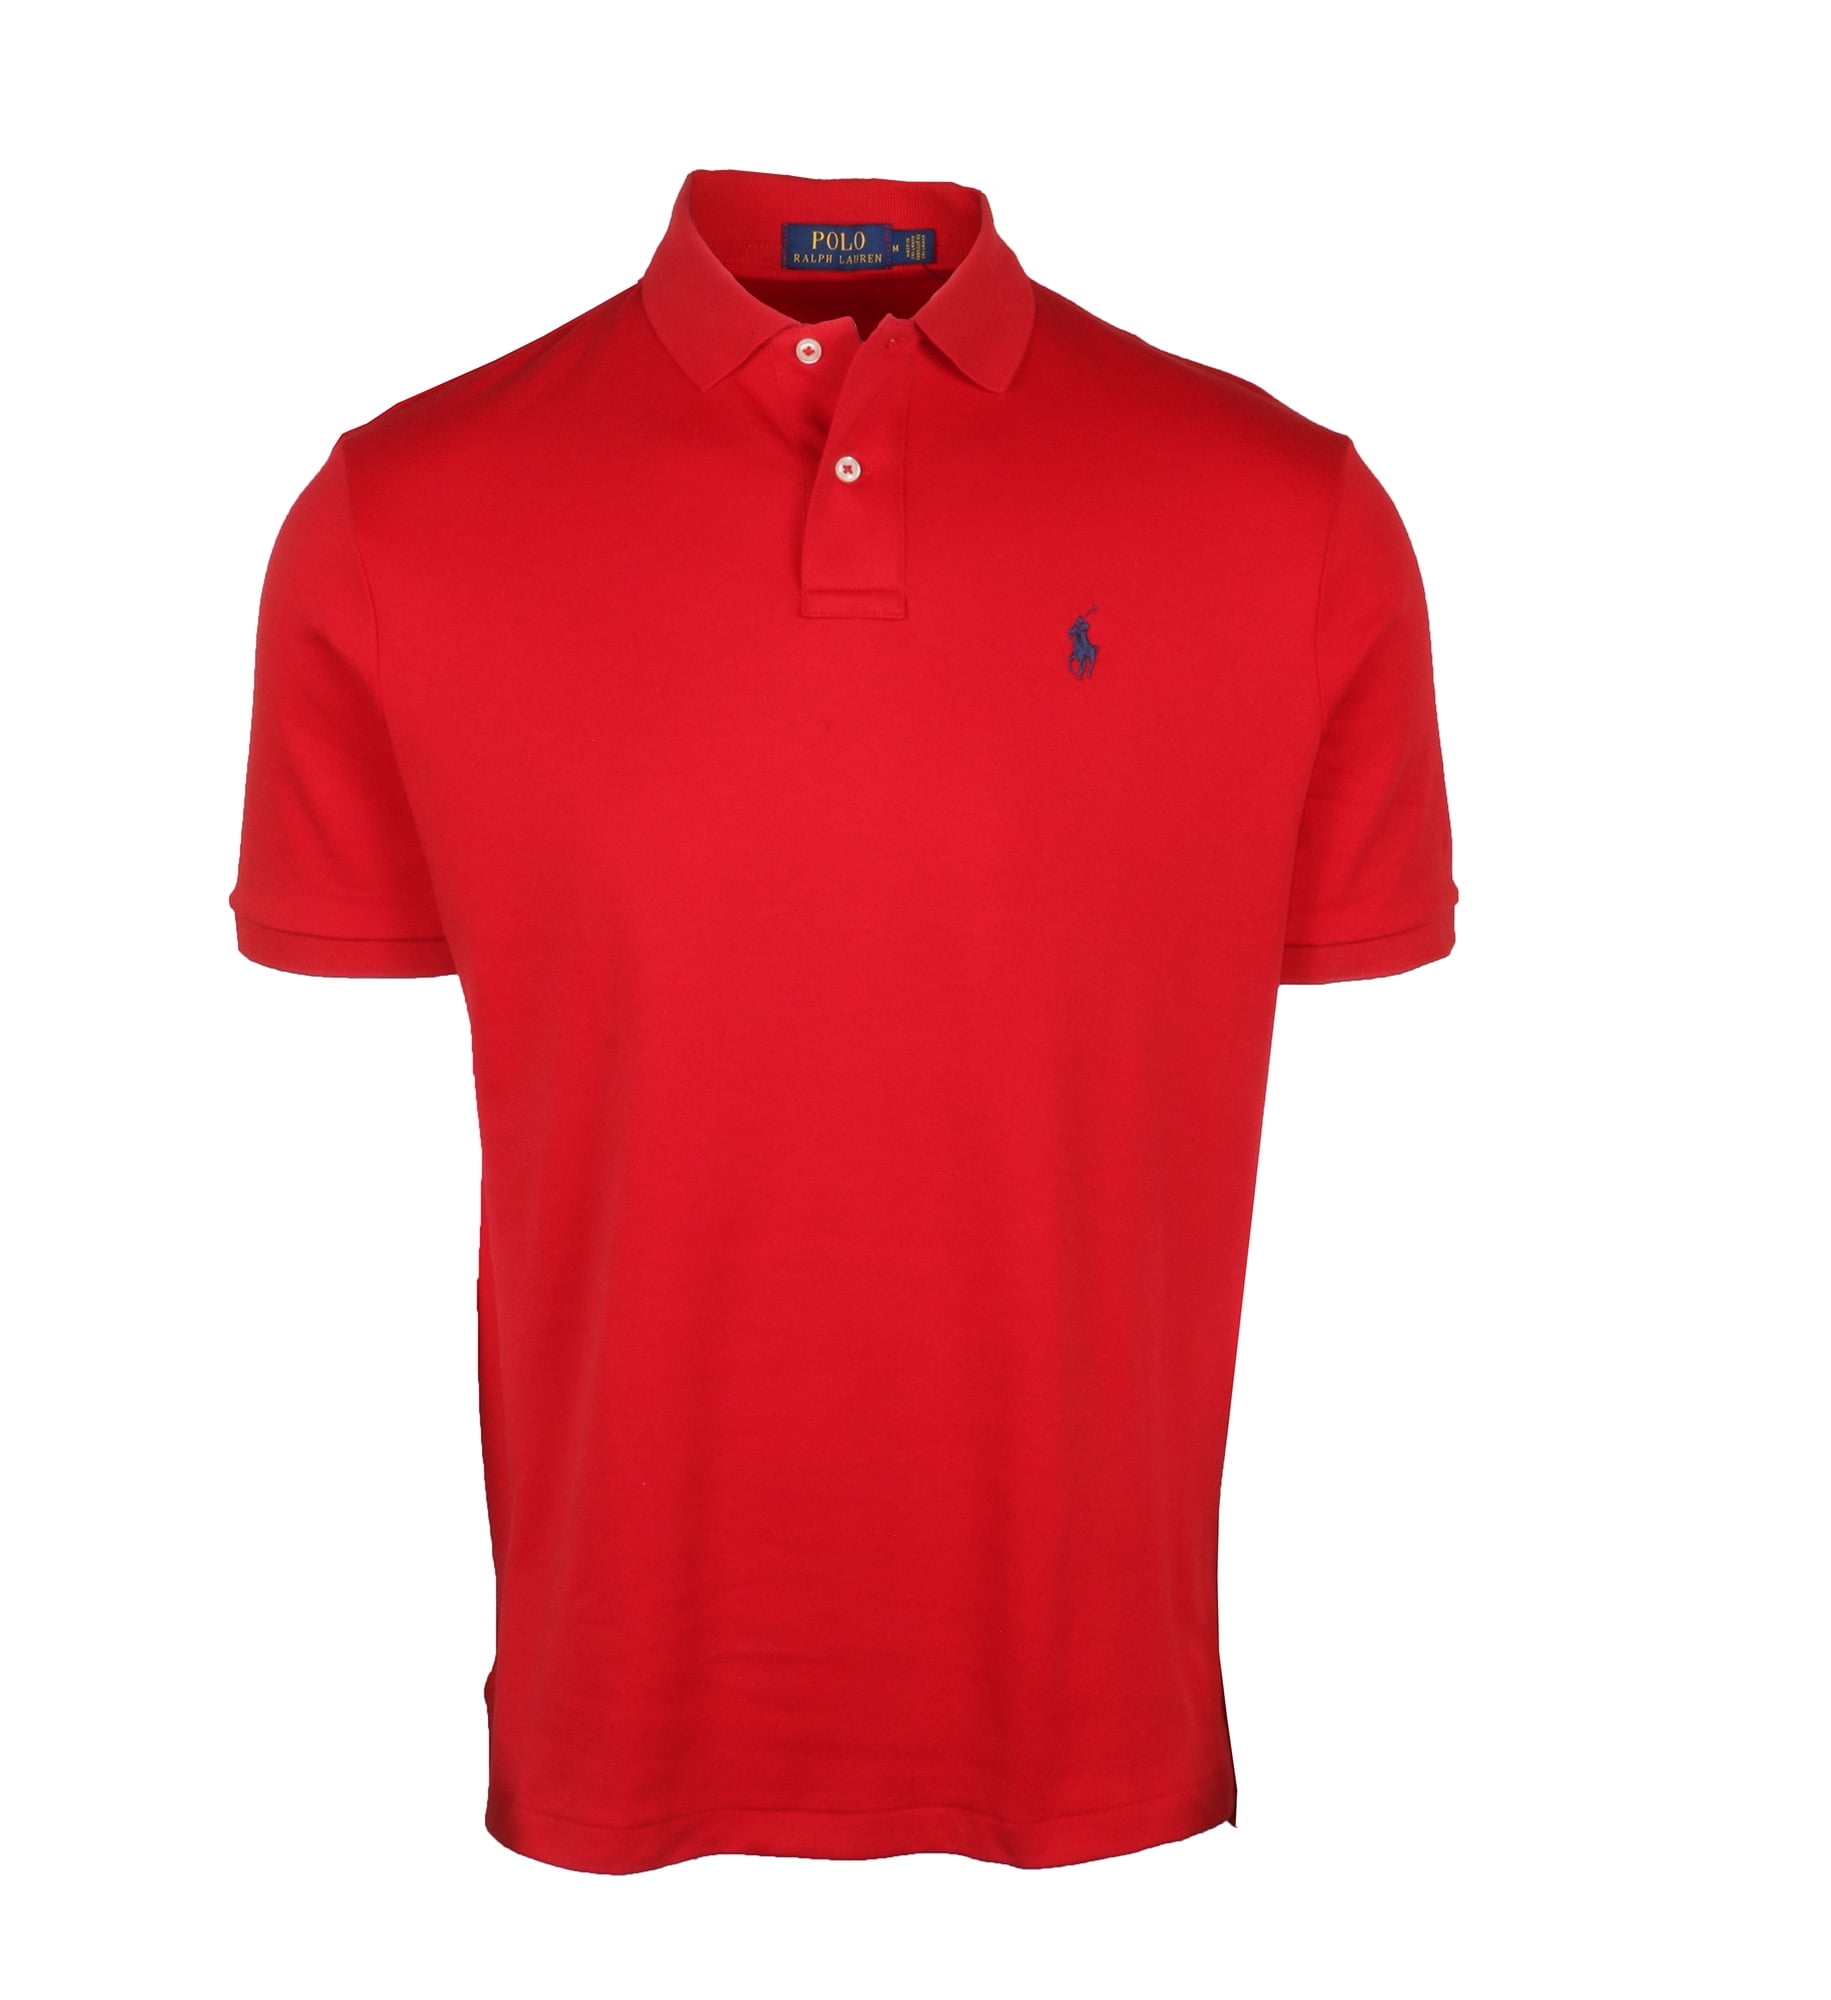 Ralph lauren polo shirts men • Compare best prices »